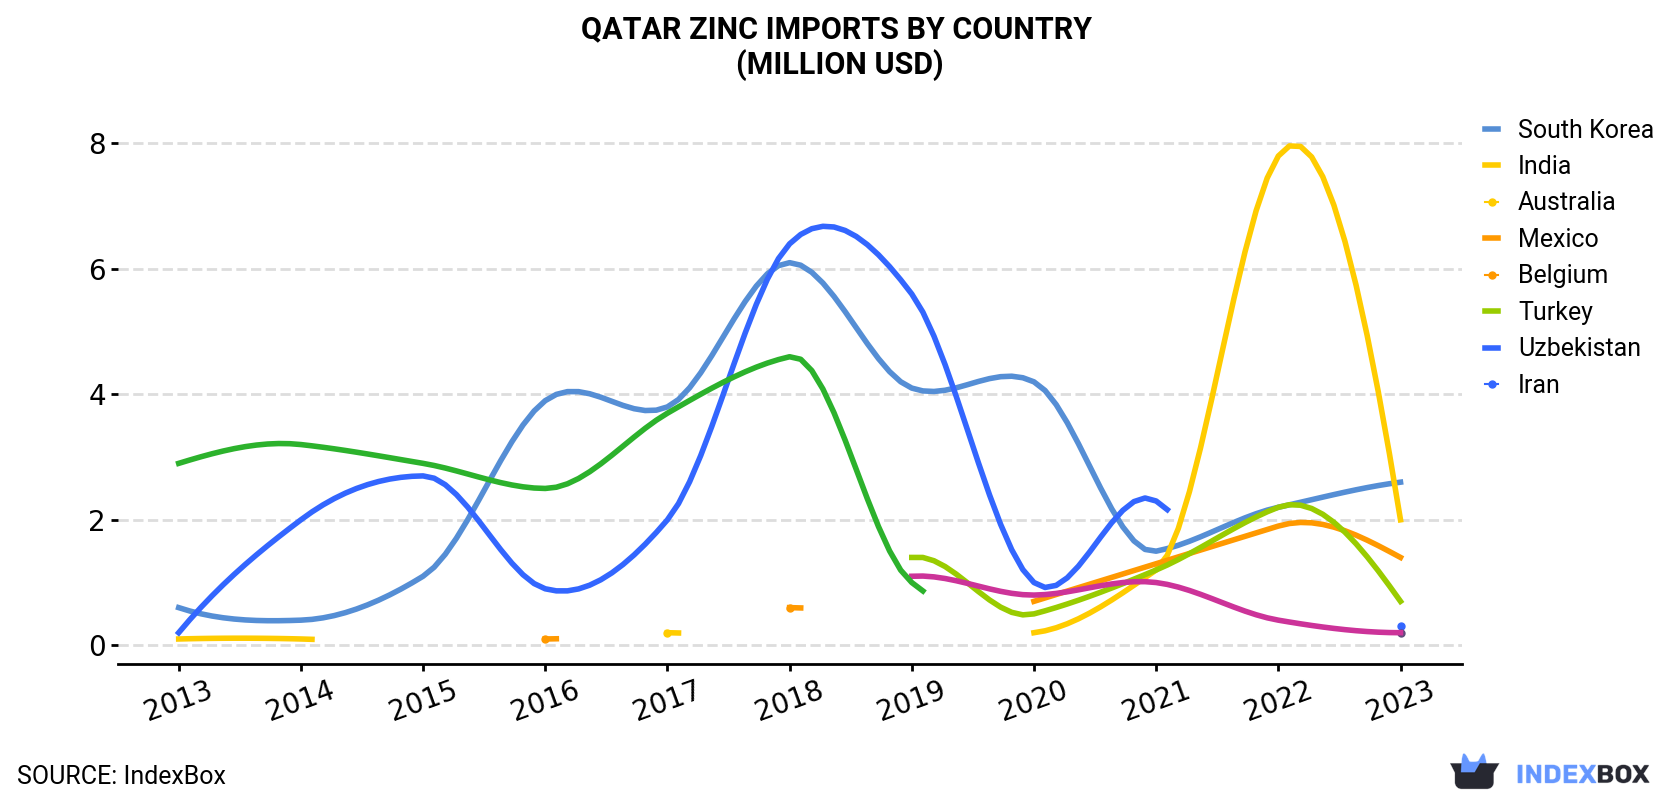 Qatar Zinc Imports By Country (Million USD)